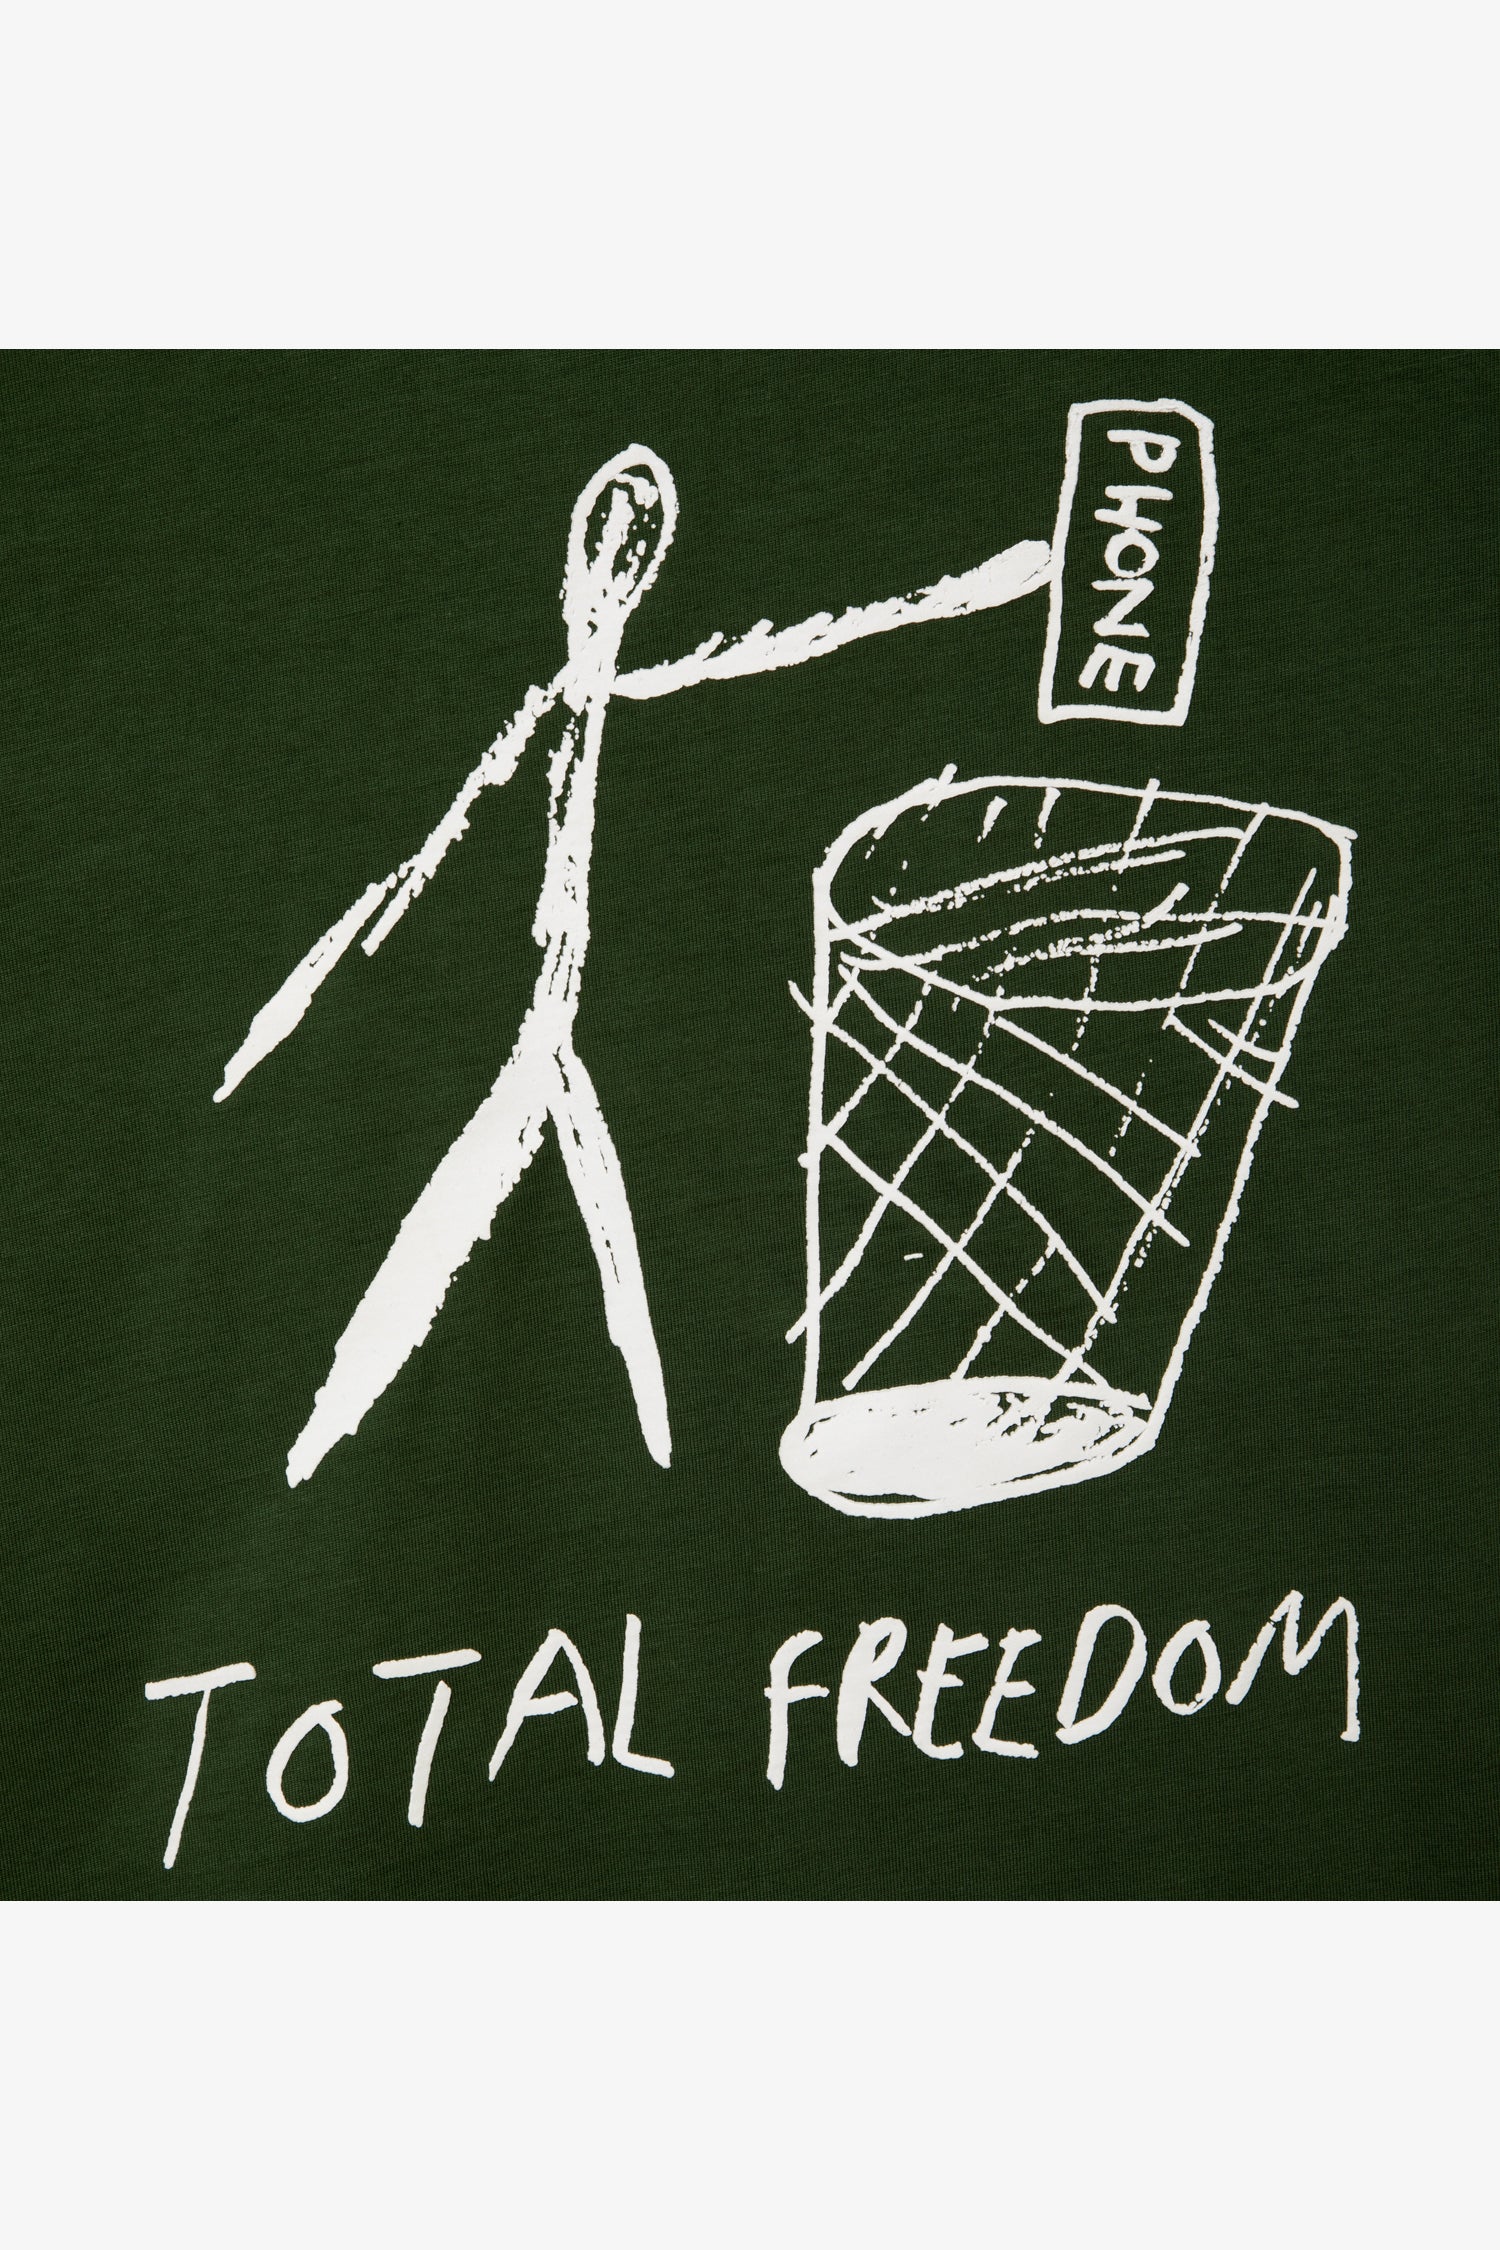 Total Freedom Tee- Selectshop FRAME